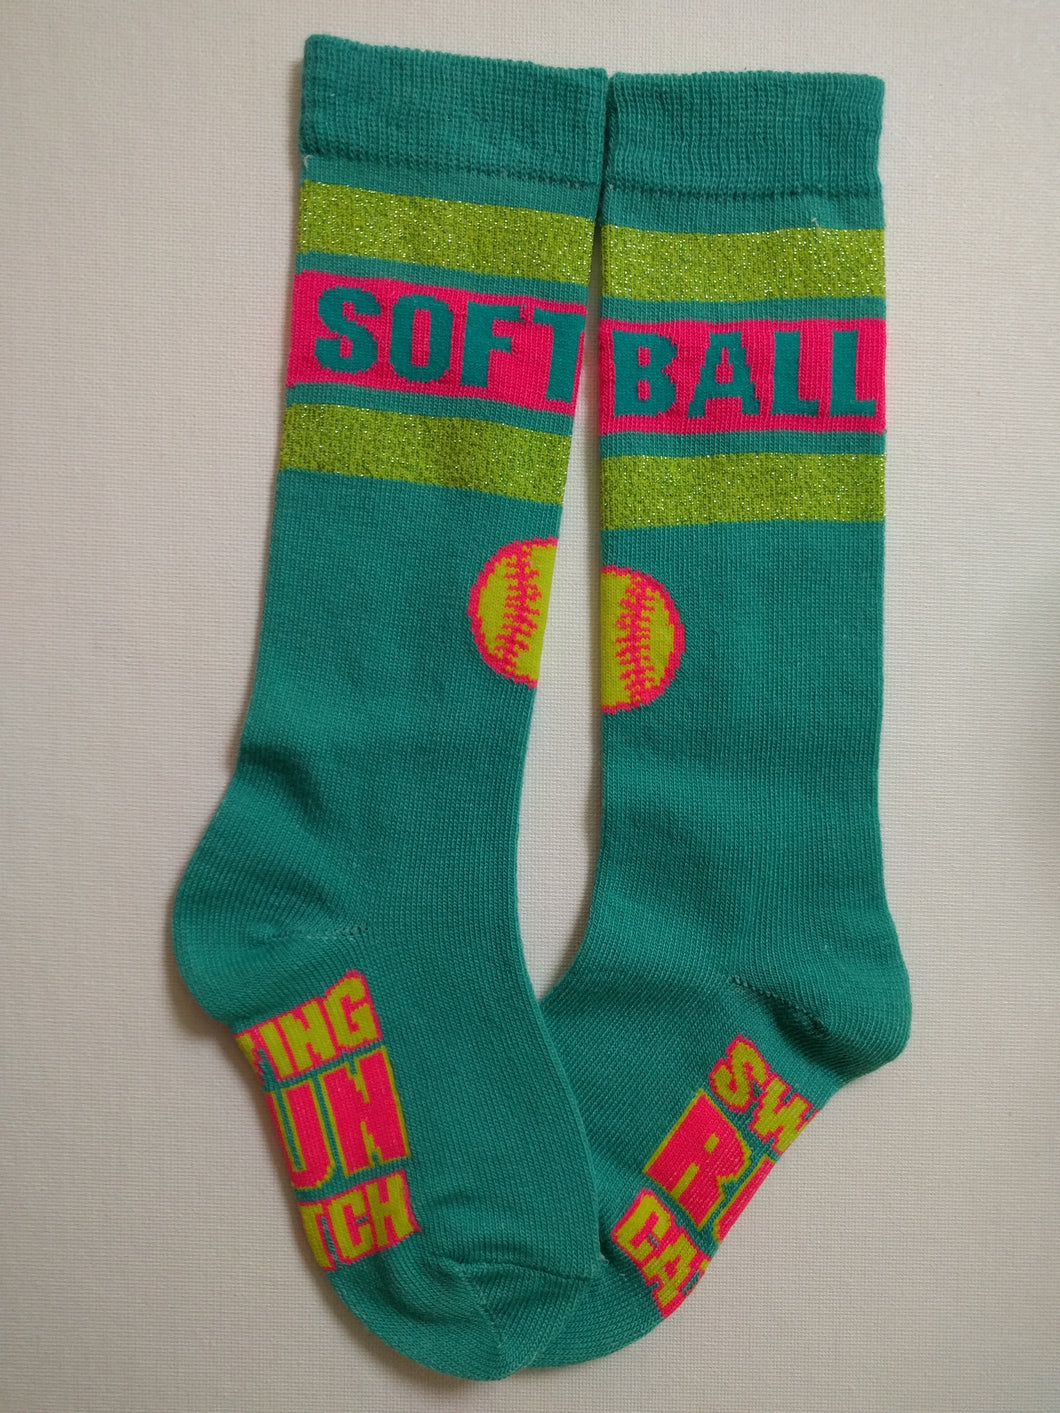 Softball Teal Knee High Socks